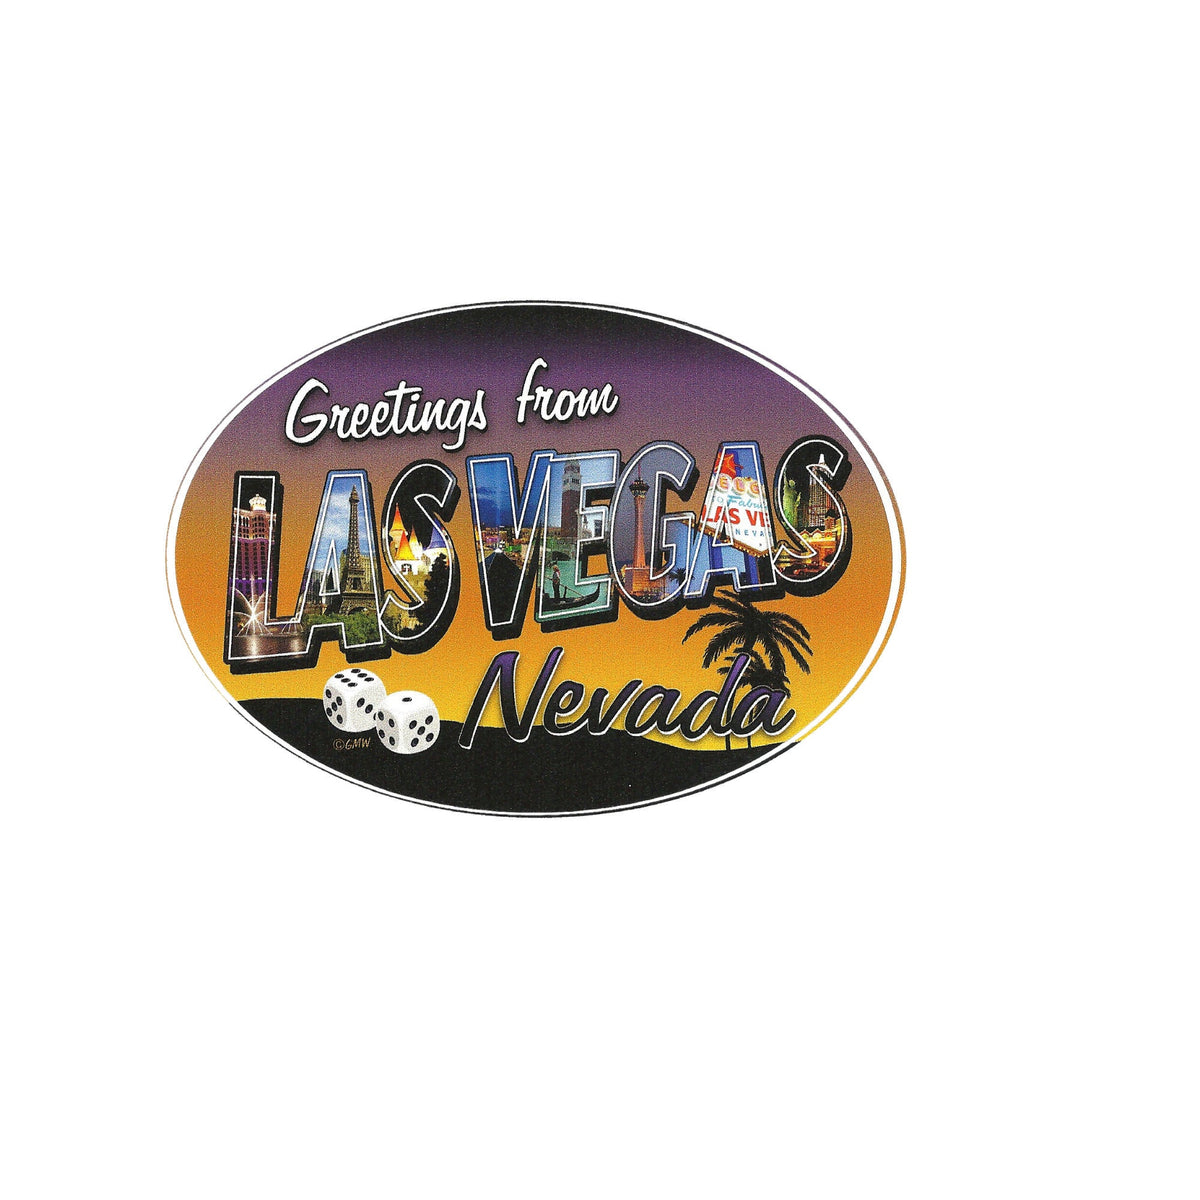 Las Vegas (LV) Oval Bumper Sticker